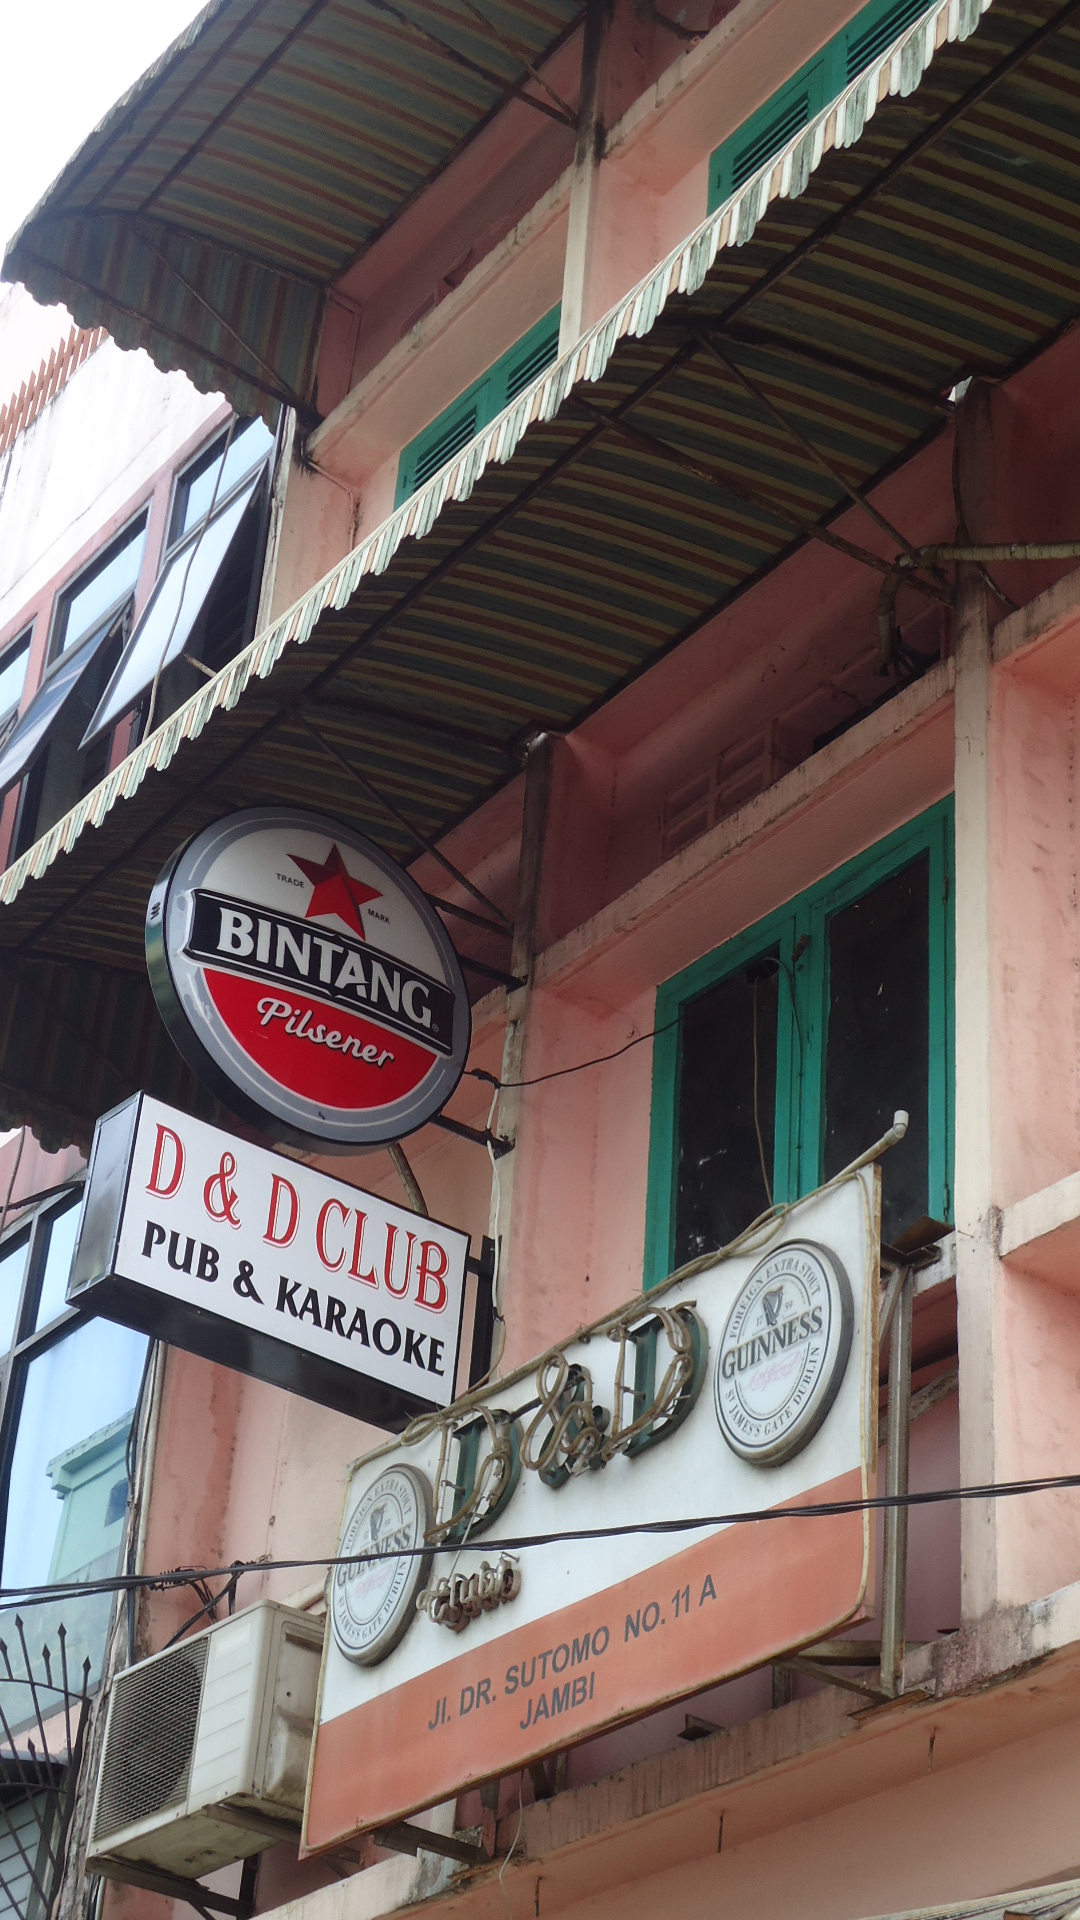 The only club I saw in Jambi, I didn't enter it. LOL "Bintang everywhere"